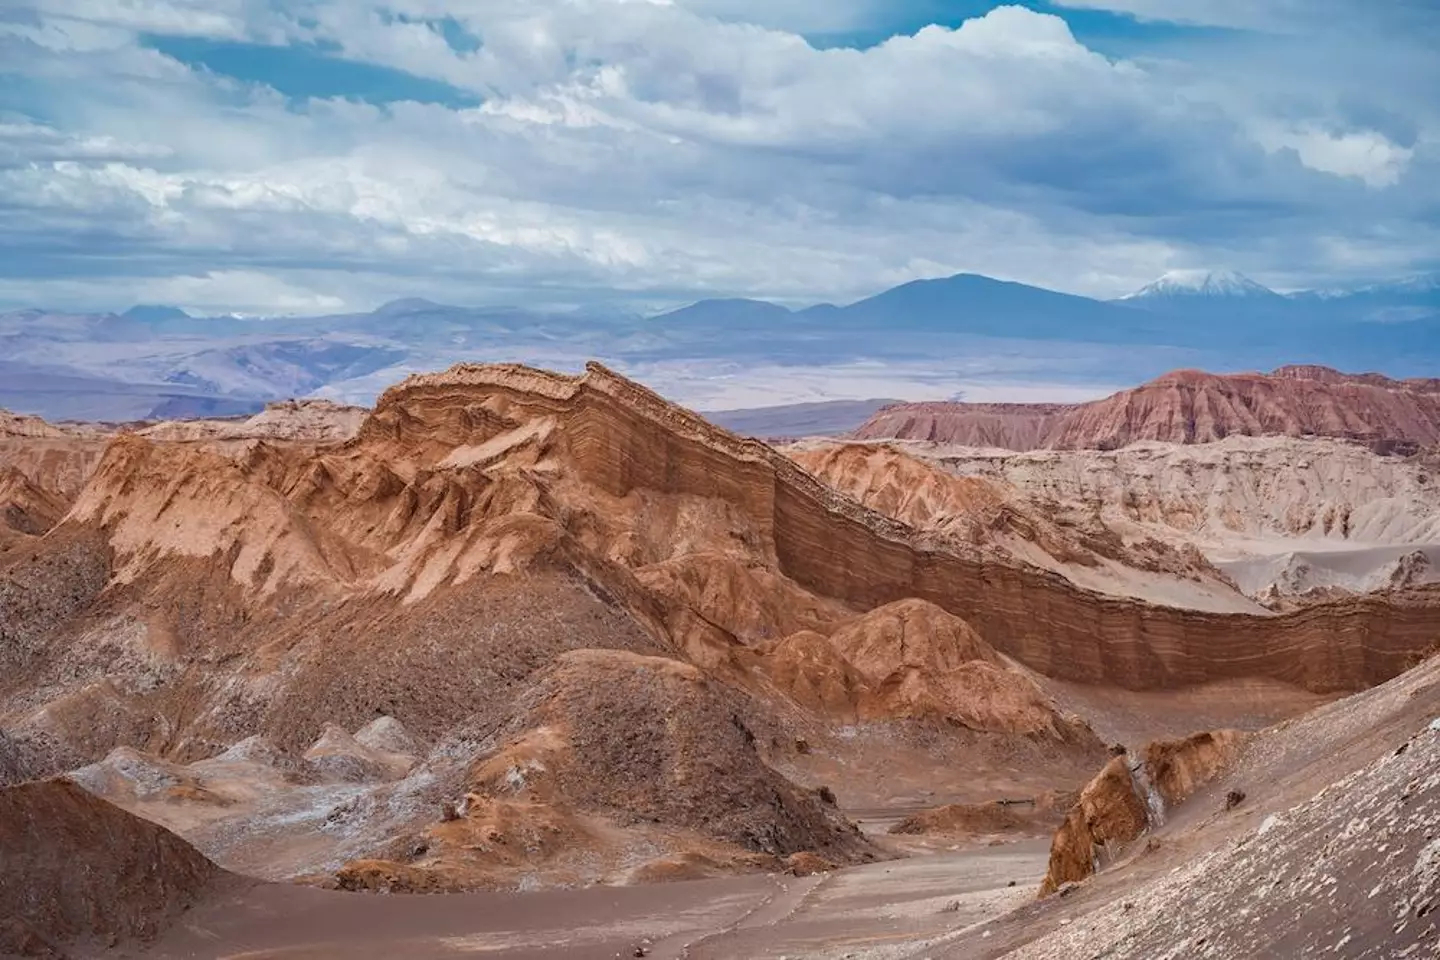 Moon Valley in the Atacama Desert, Chile.